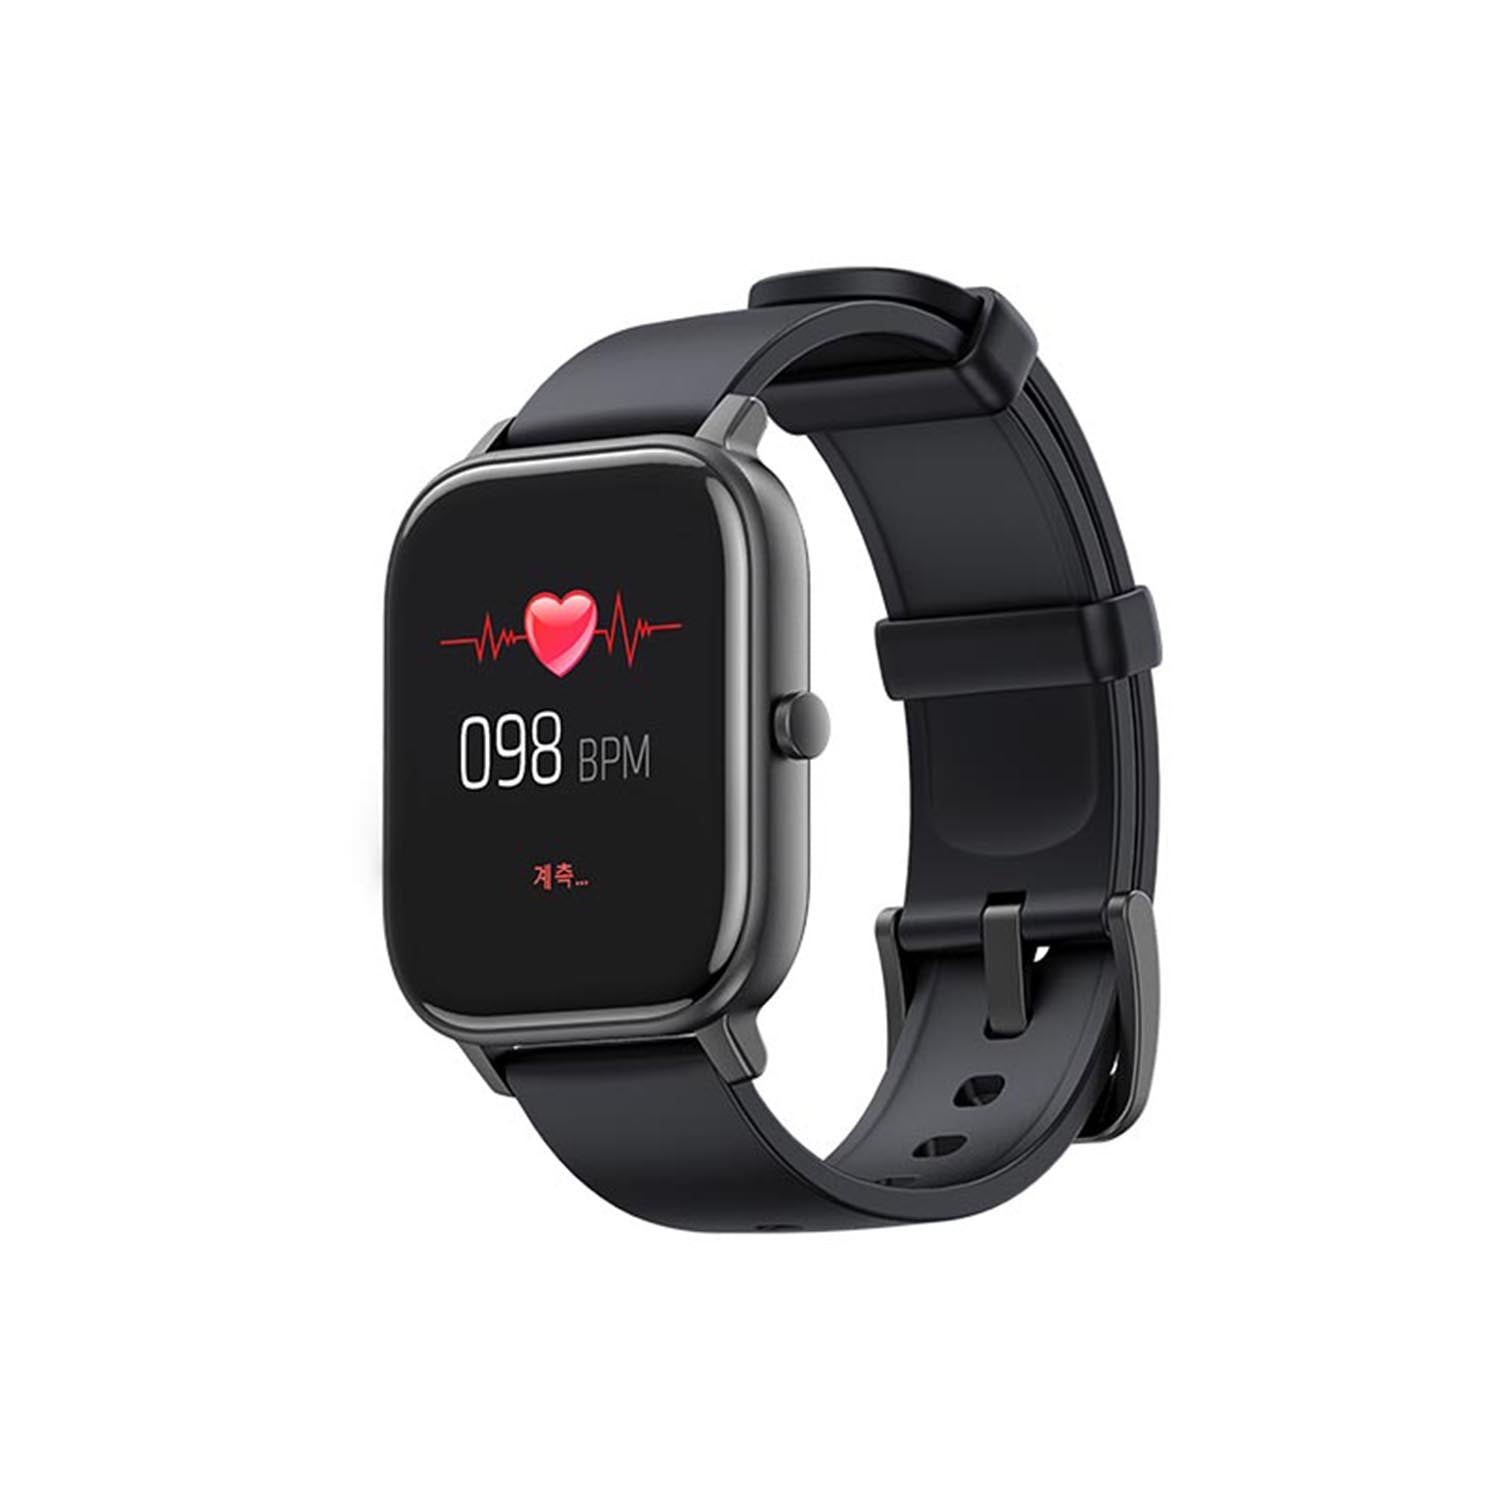 HAVIT M9006 PRO Full Touch Sports Smart Watch, Fitness Activity Tracker, Custom Dial